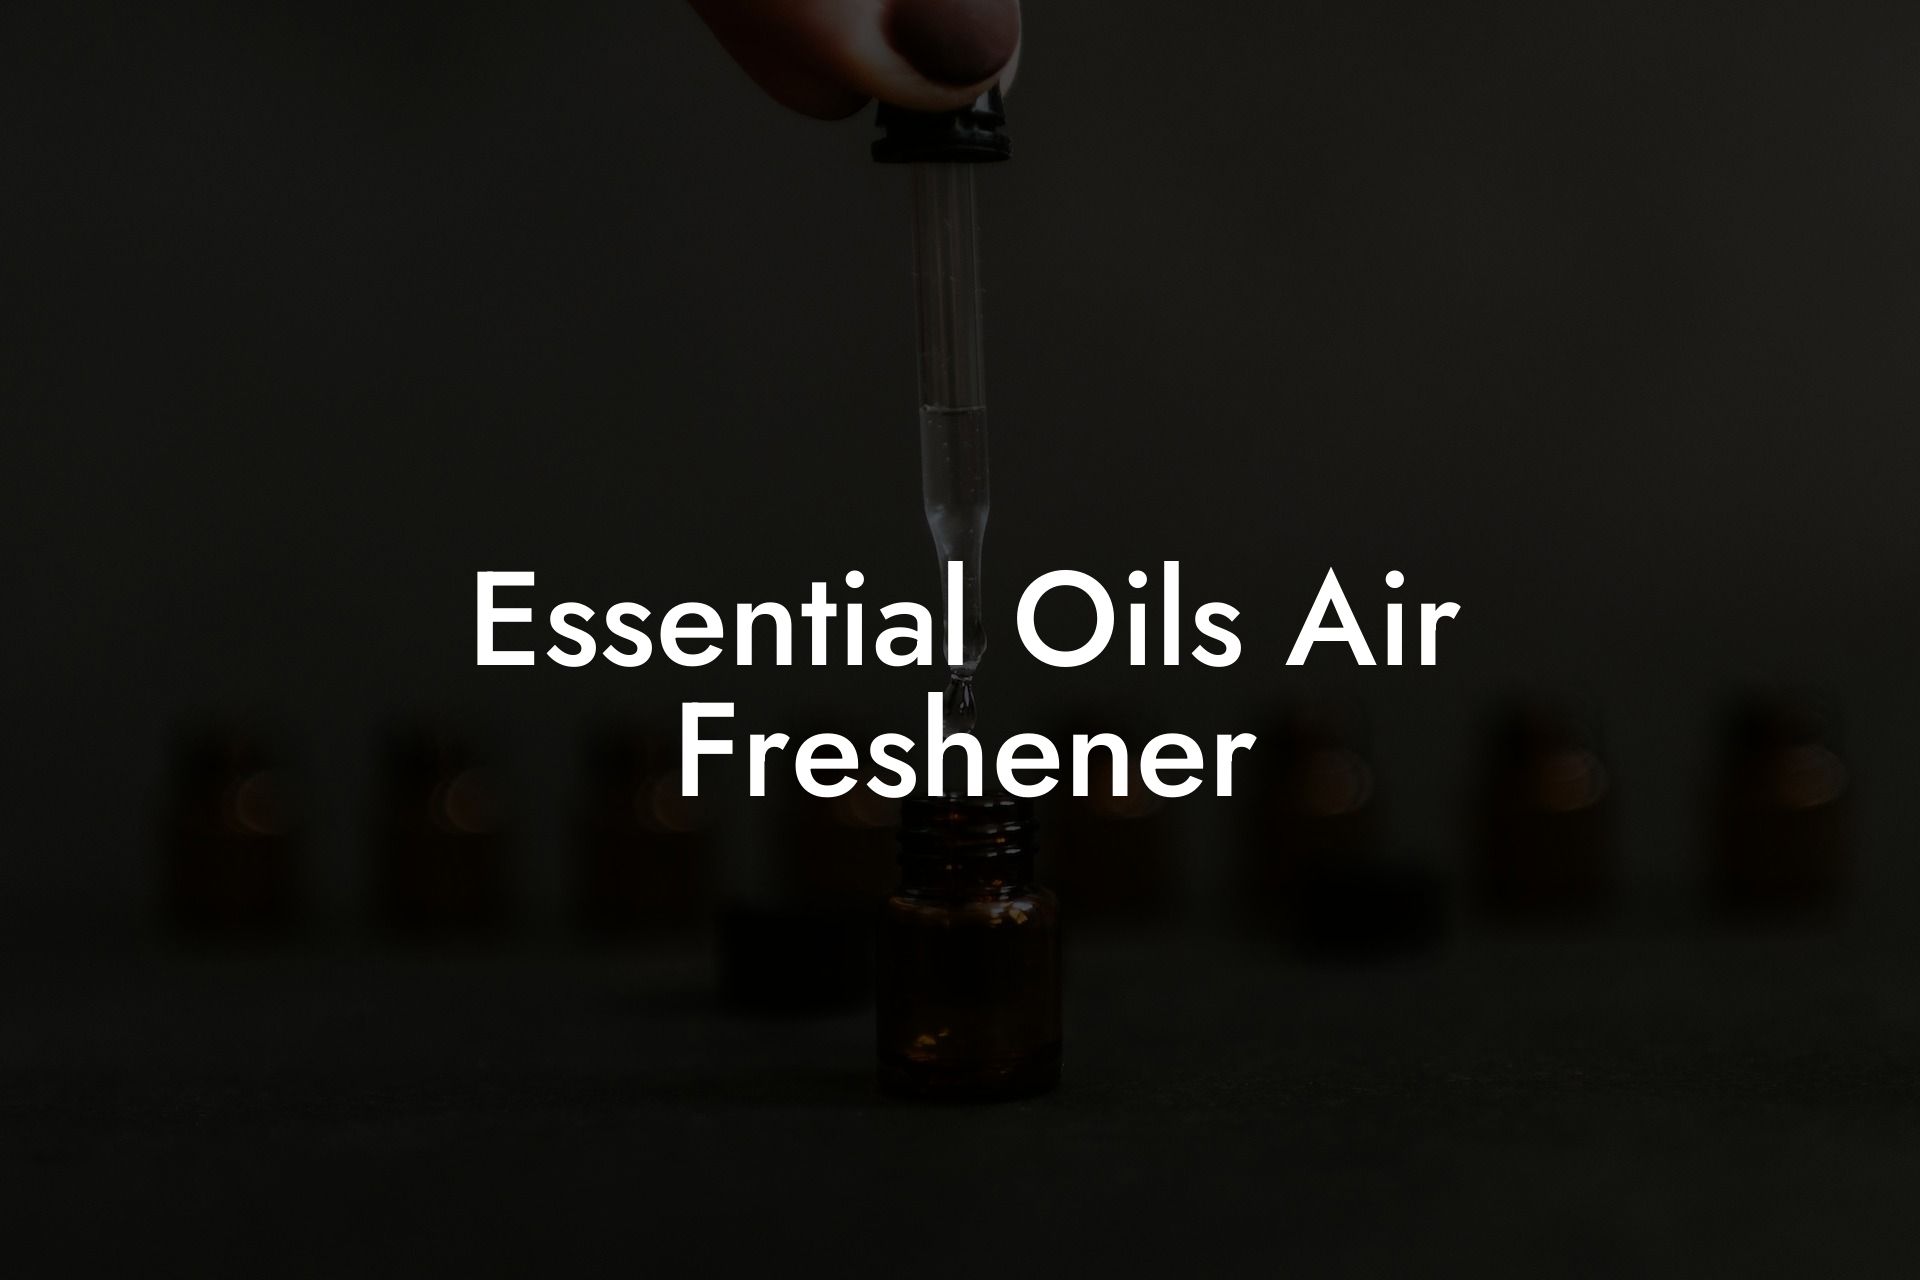 Essential Oils Air Freshener